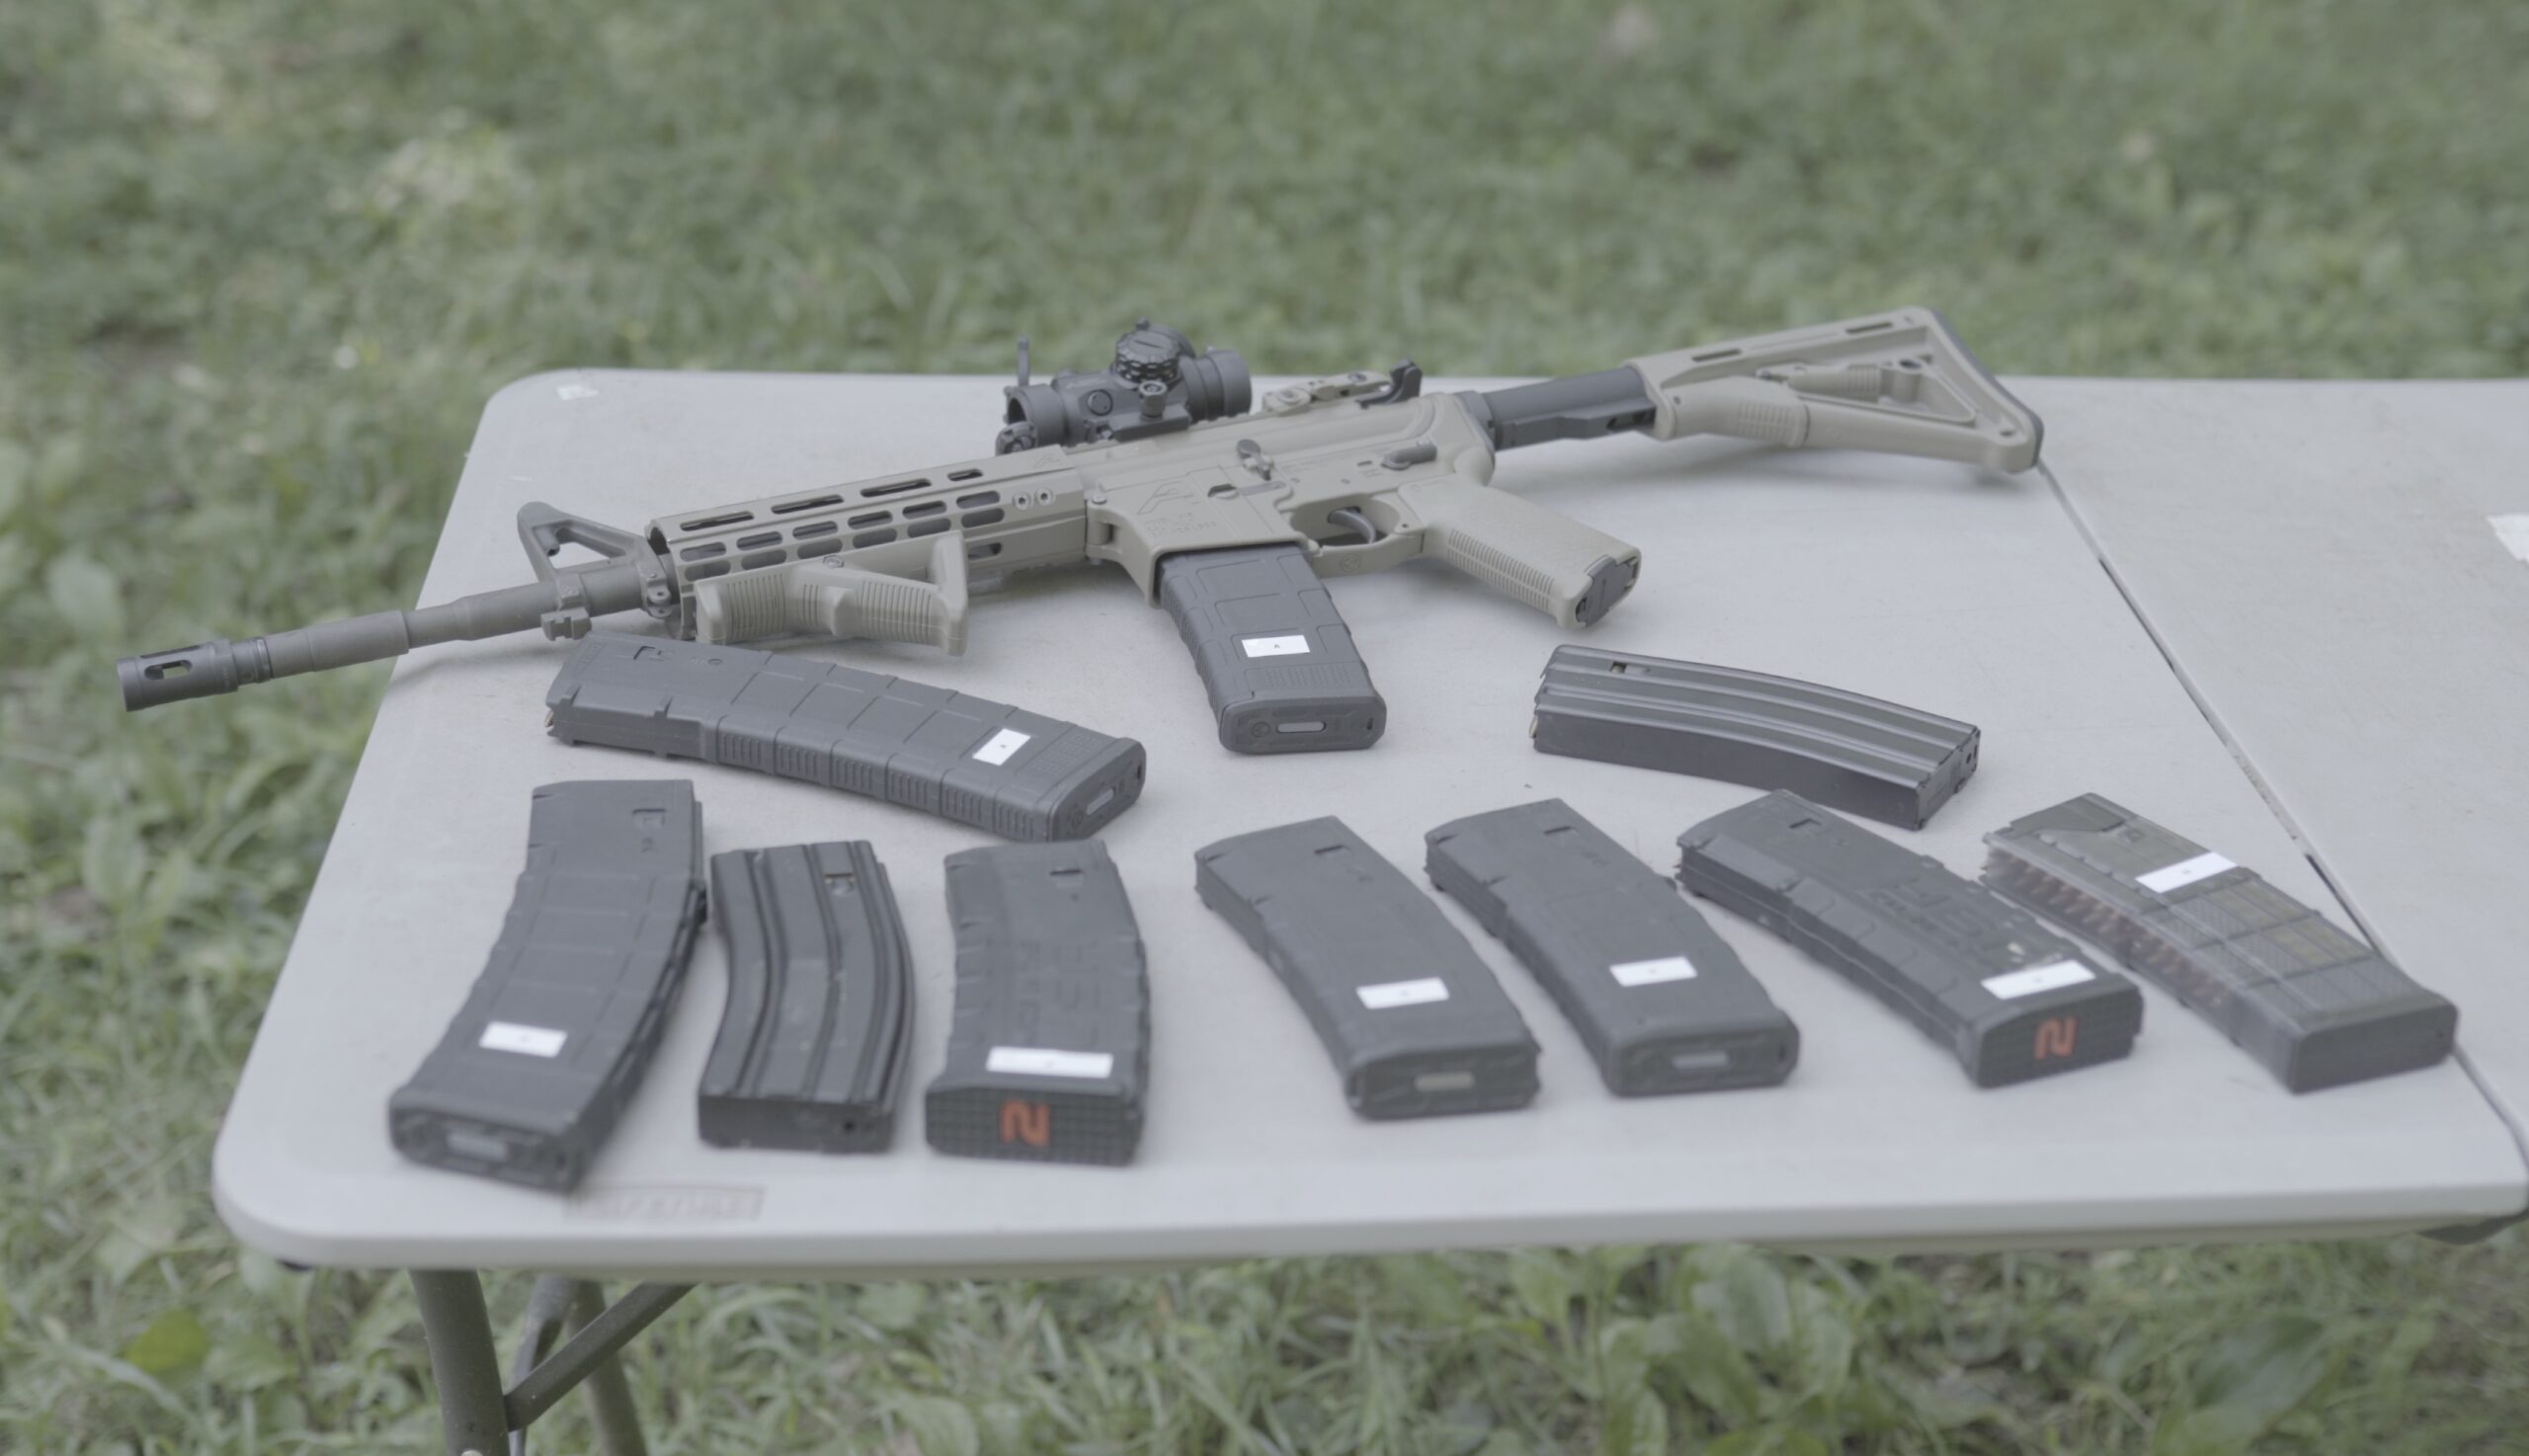 rifle magazines on a table with an ar-15